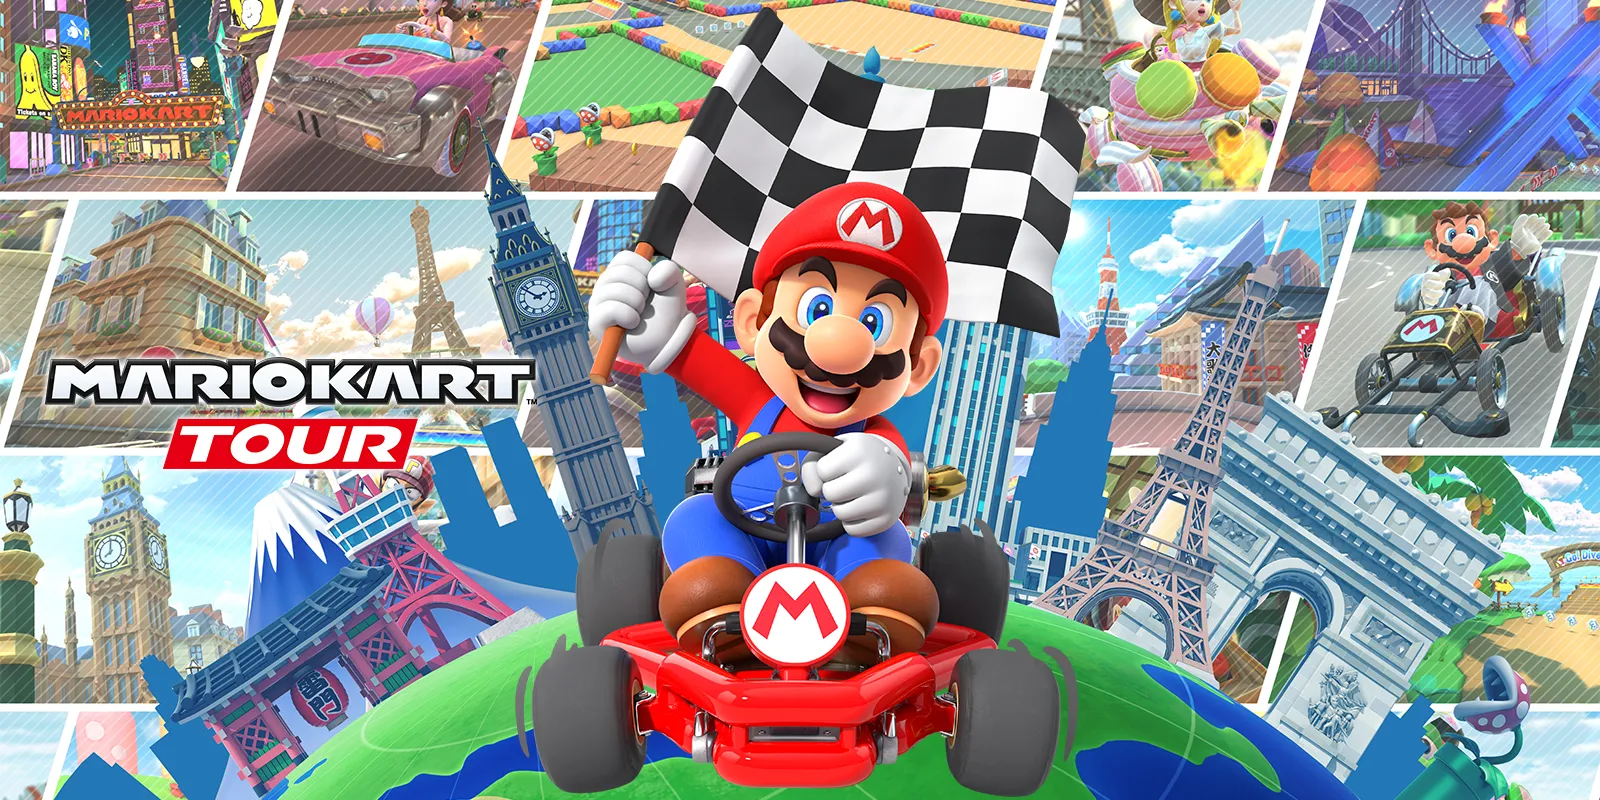 Are you sad to see Mario Kart Tour end?